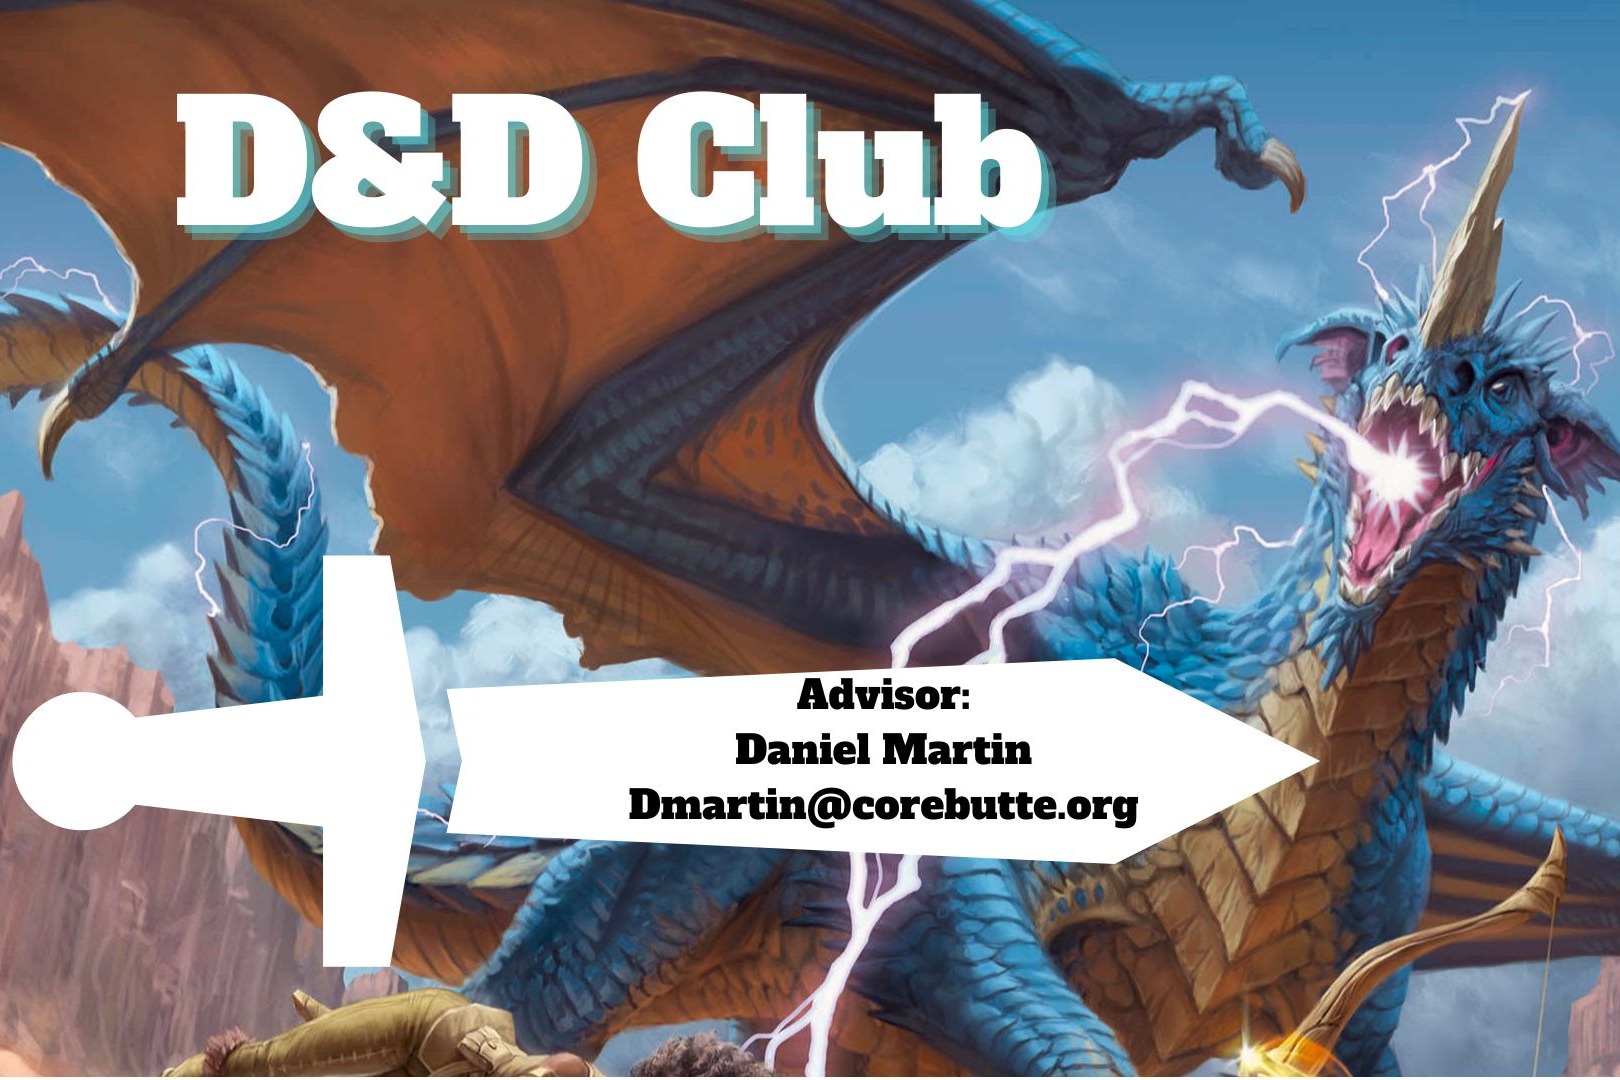 D&D advisor Daniel Martin, Dmartin@corebutte.org